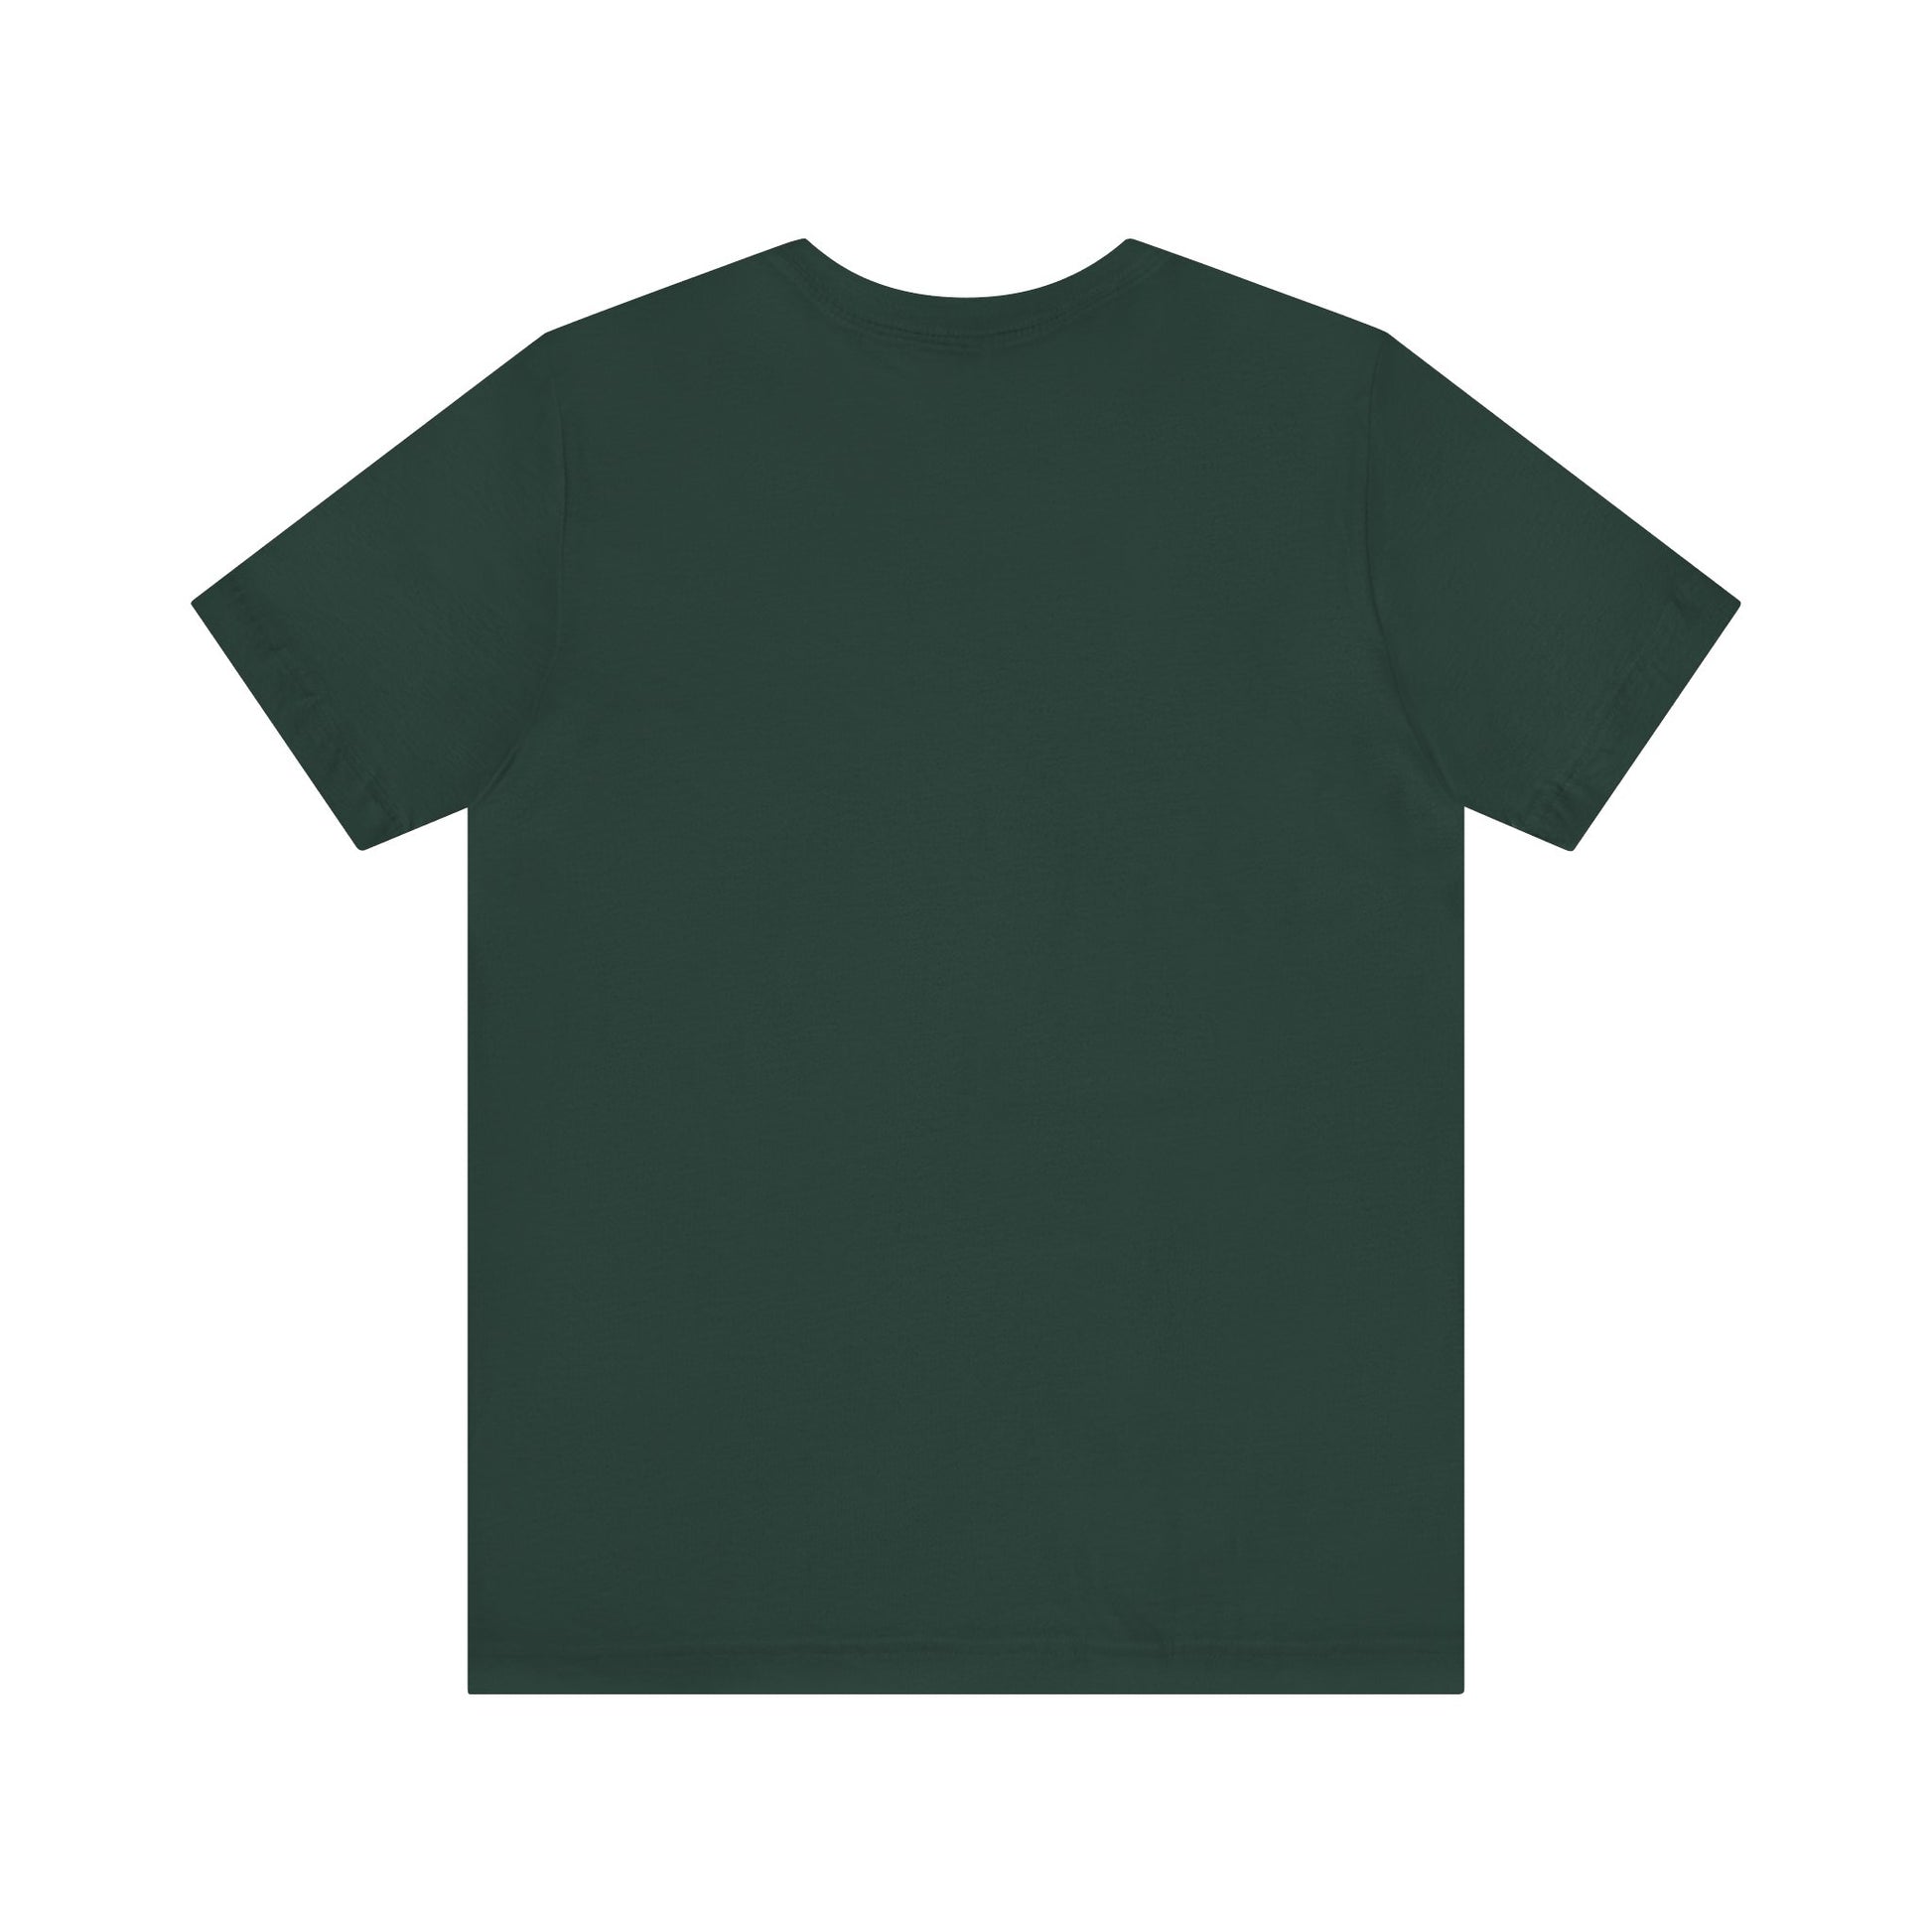 verde signature founding emblem t-shirt g back